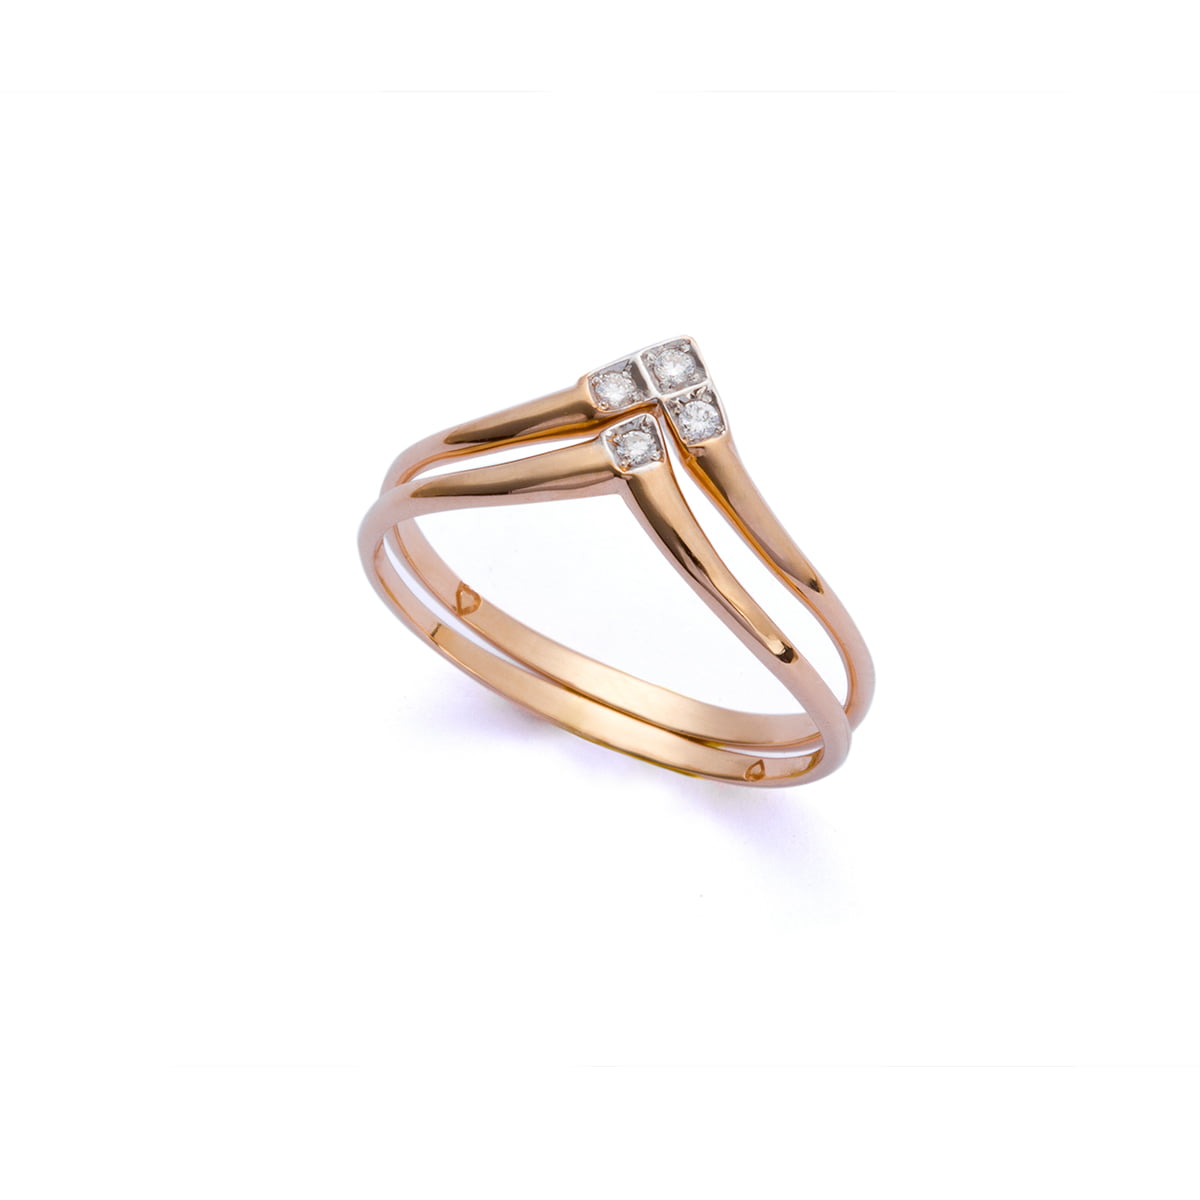 Lara and Emmy Rings Set 14K Gold White Diamonds Rings 